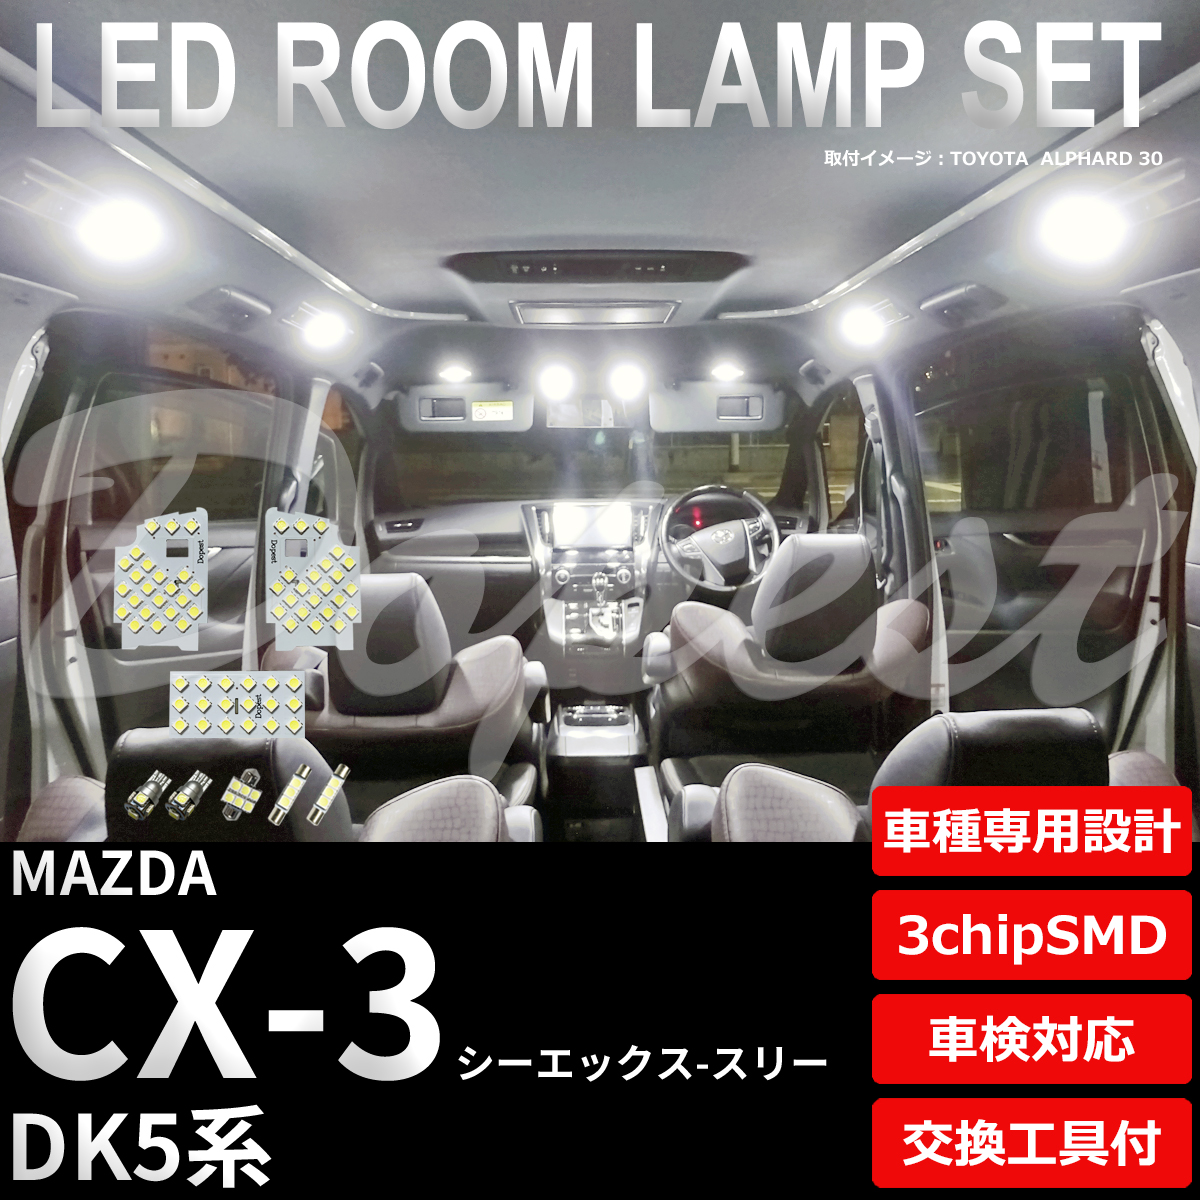 CX-3 LEDルームランプセット DK5系 車内 車種別 車 室内